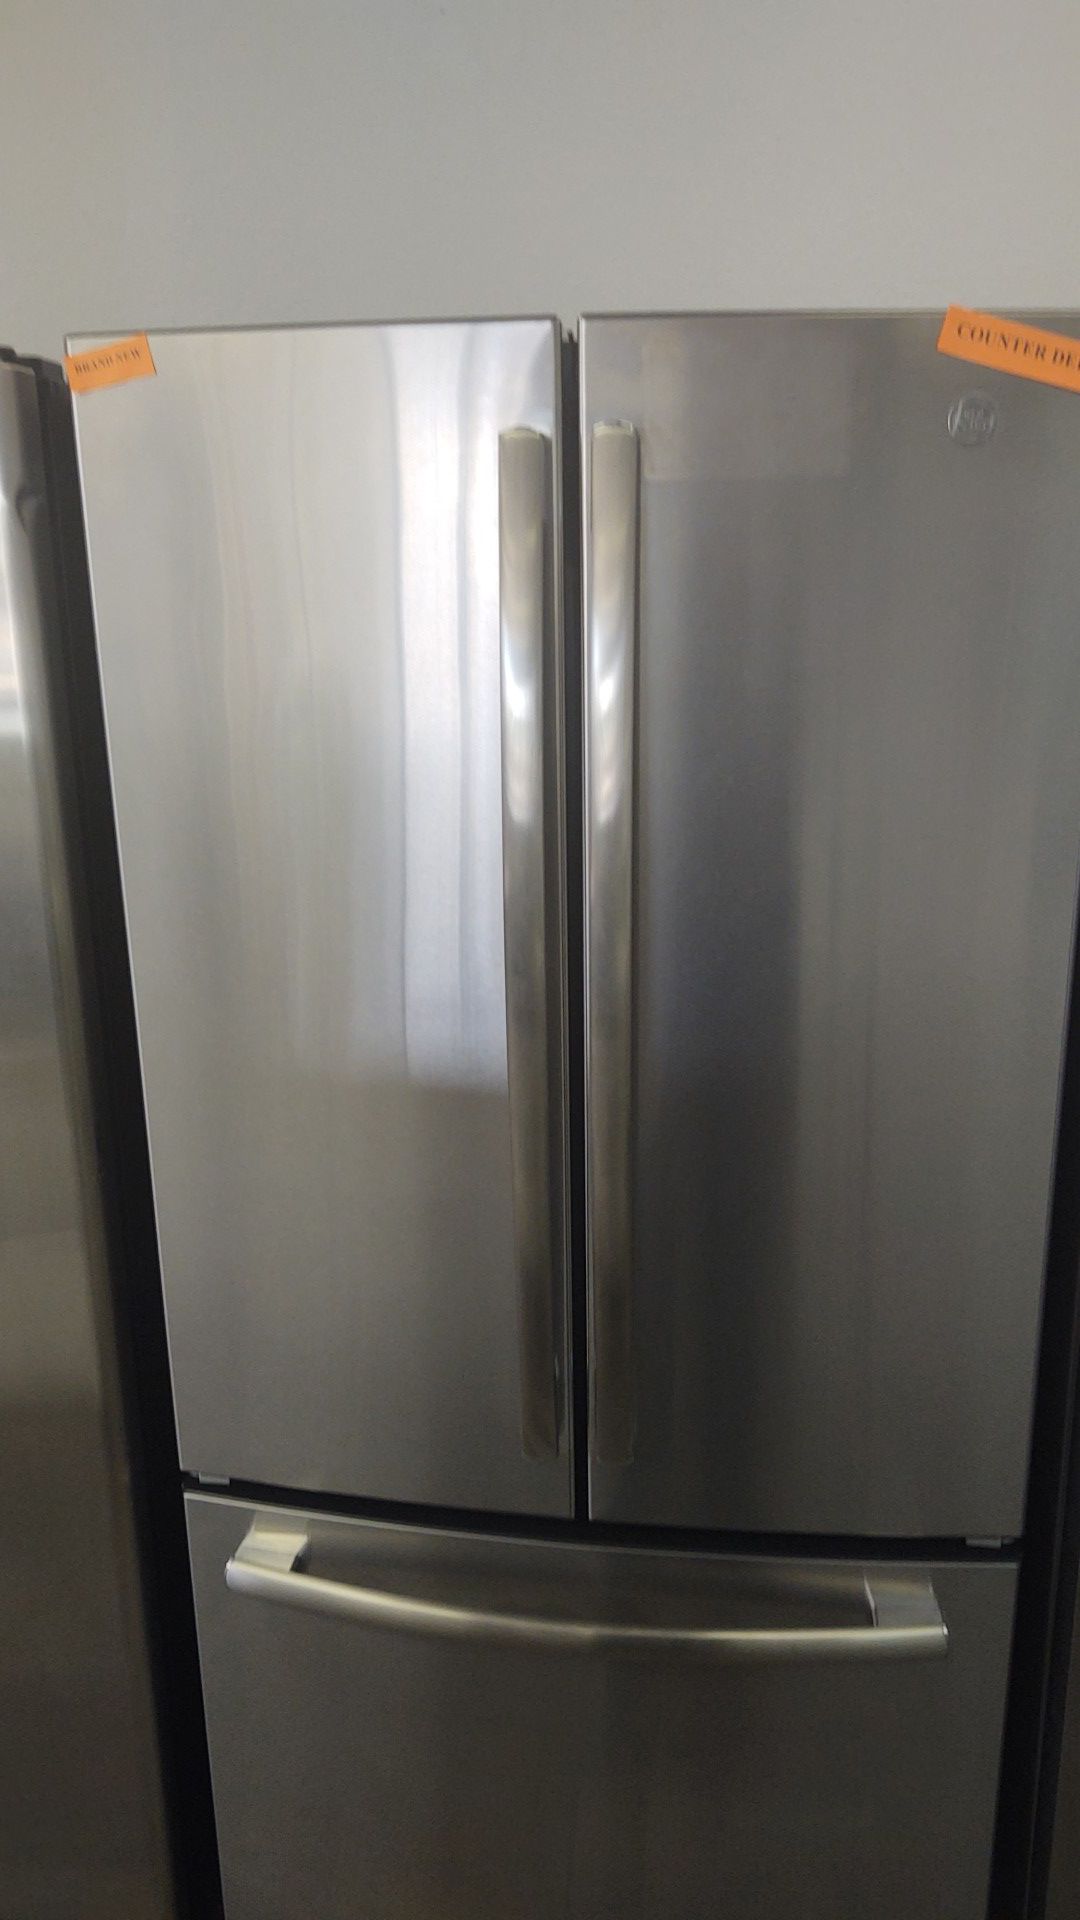 New GE Refrigerator- warranty included